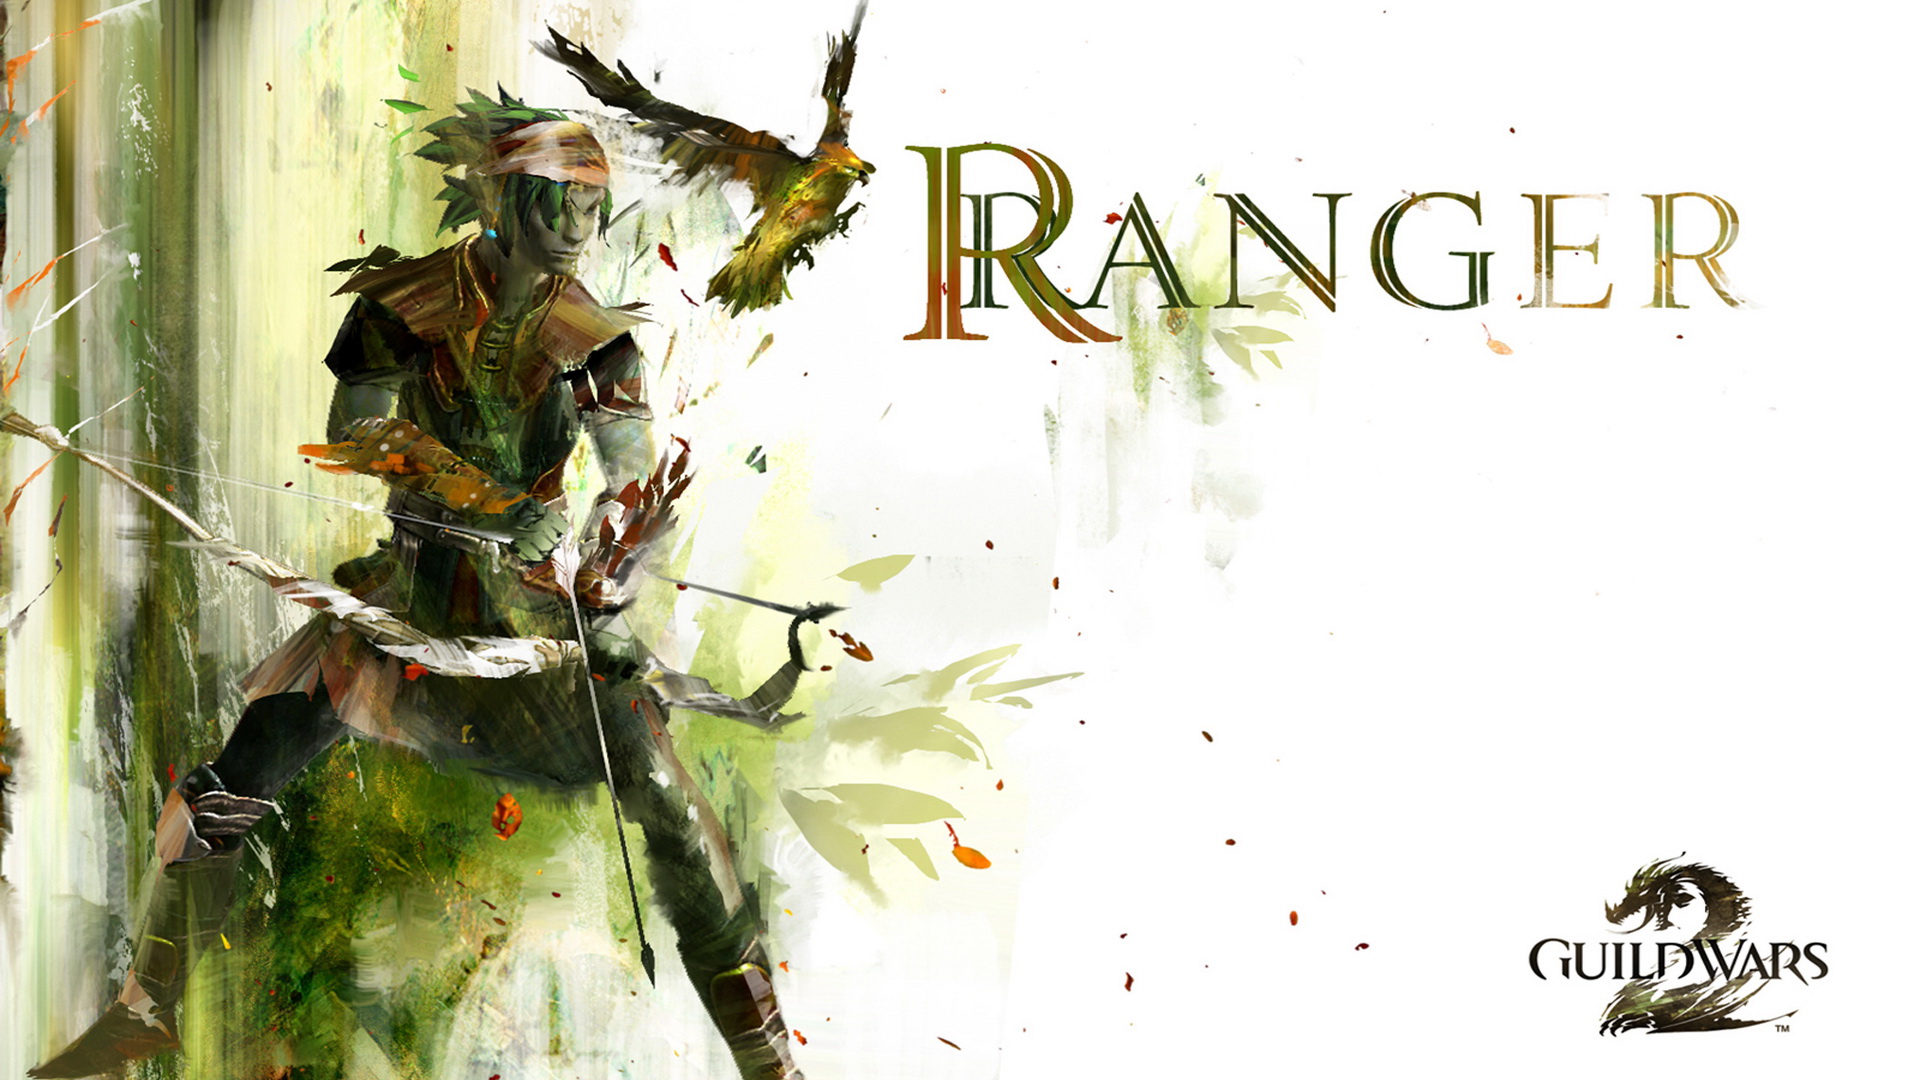 Guild Wars Ranger Wallpaper Game HD Video Games